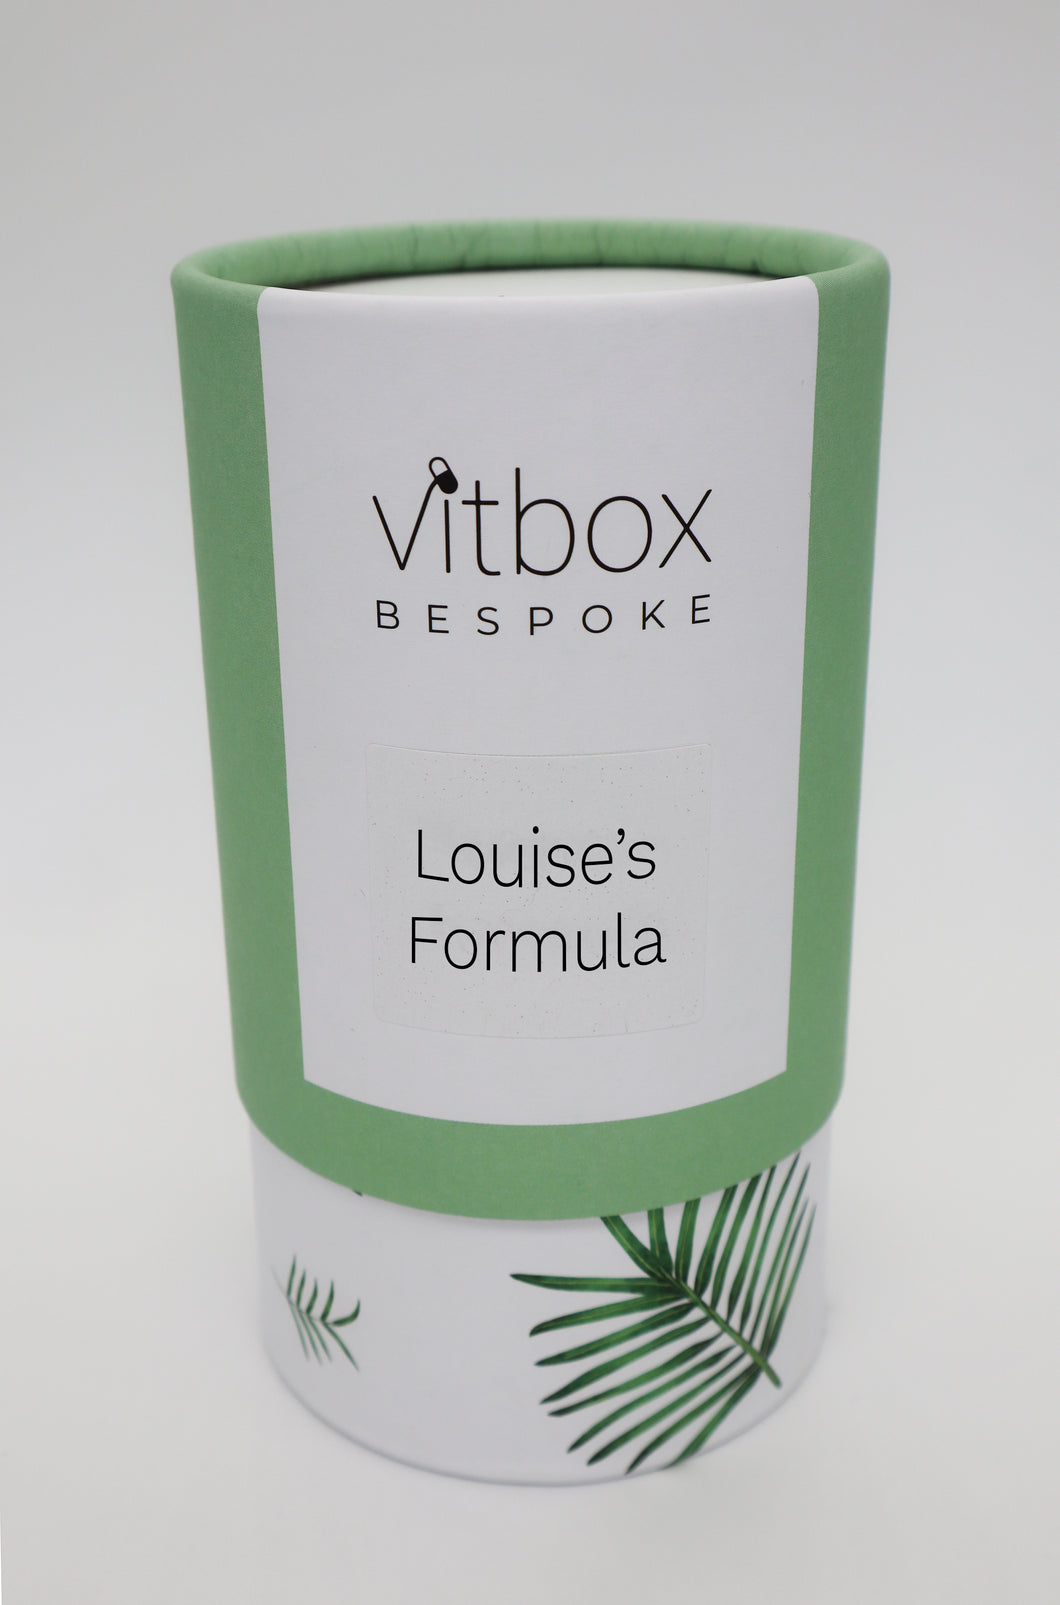 Louise's Vitbox Bespoke